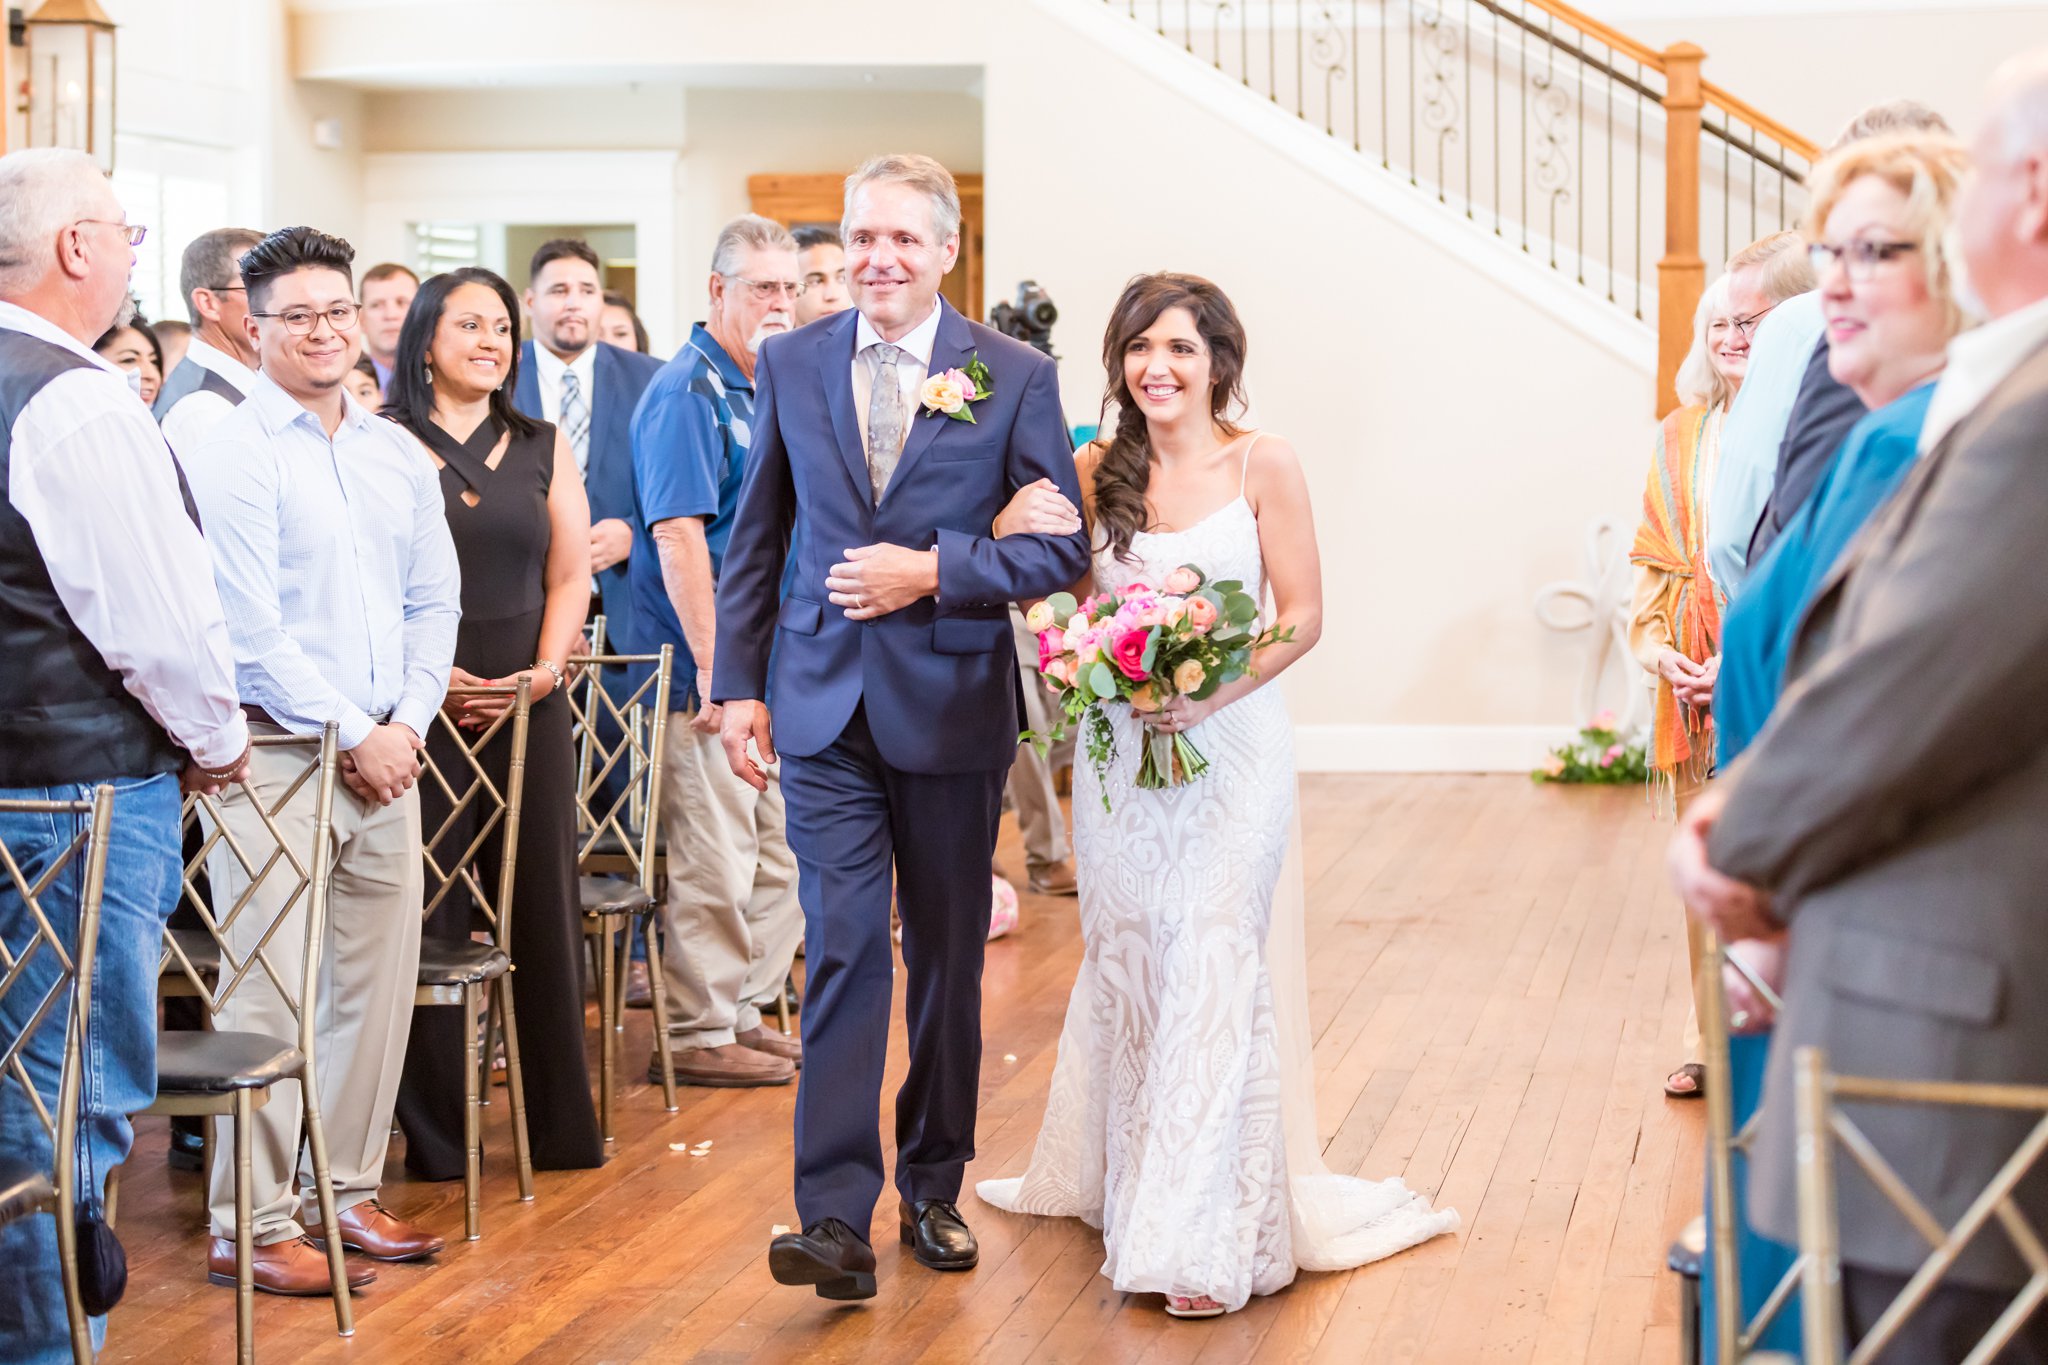 A Powder Blue, Blush and Hot Pink wedding at Milltown Historic District in New Braunfels, TX by Dawn Elizabeth Studios, San Antonio Wedding Photographer